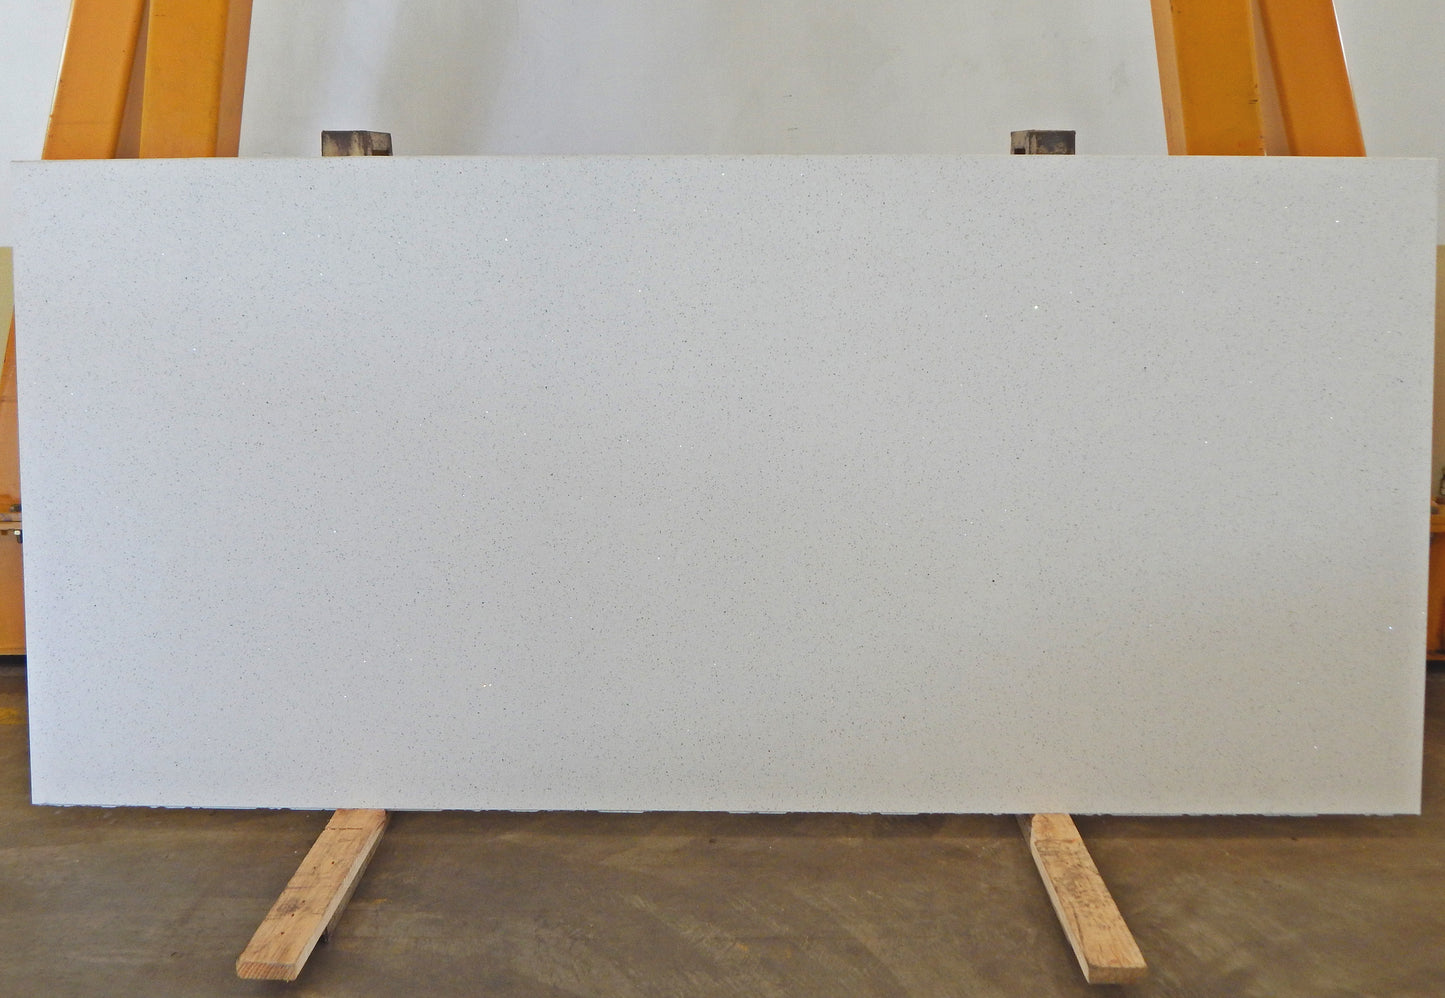 Lámina de Cuarzo White Sand (162x325x2cm) Pulido